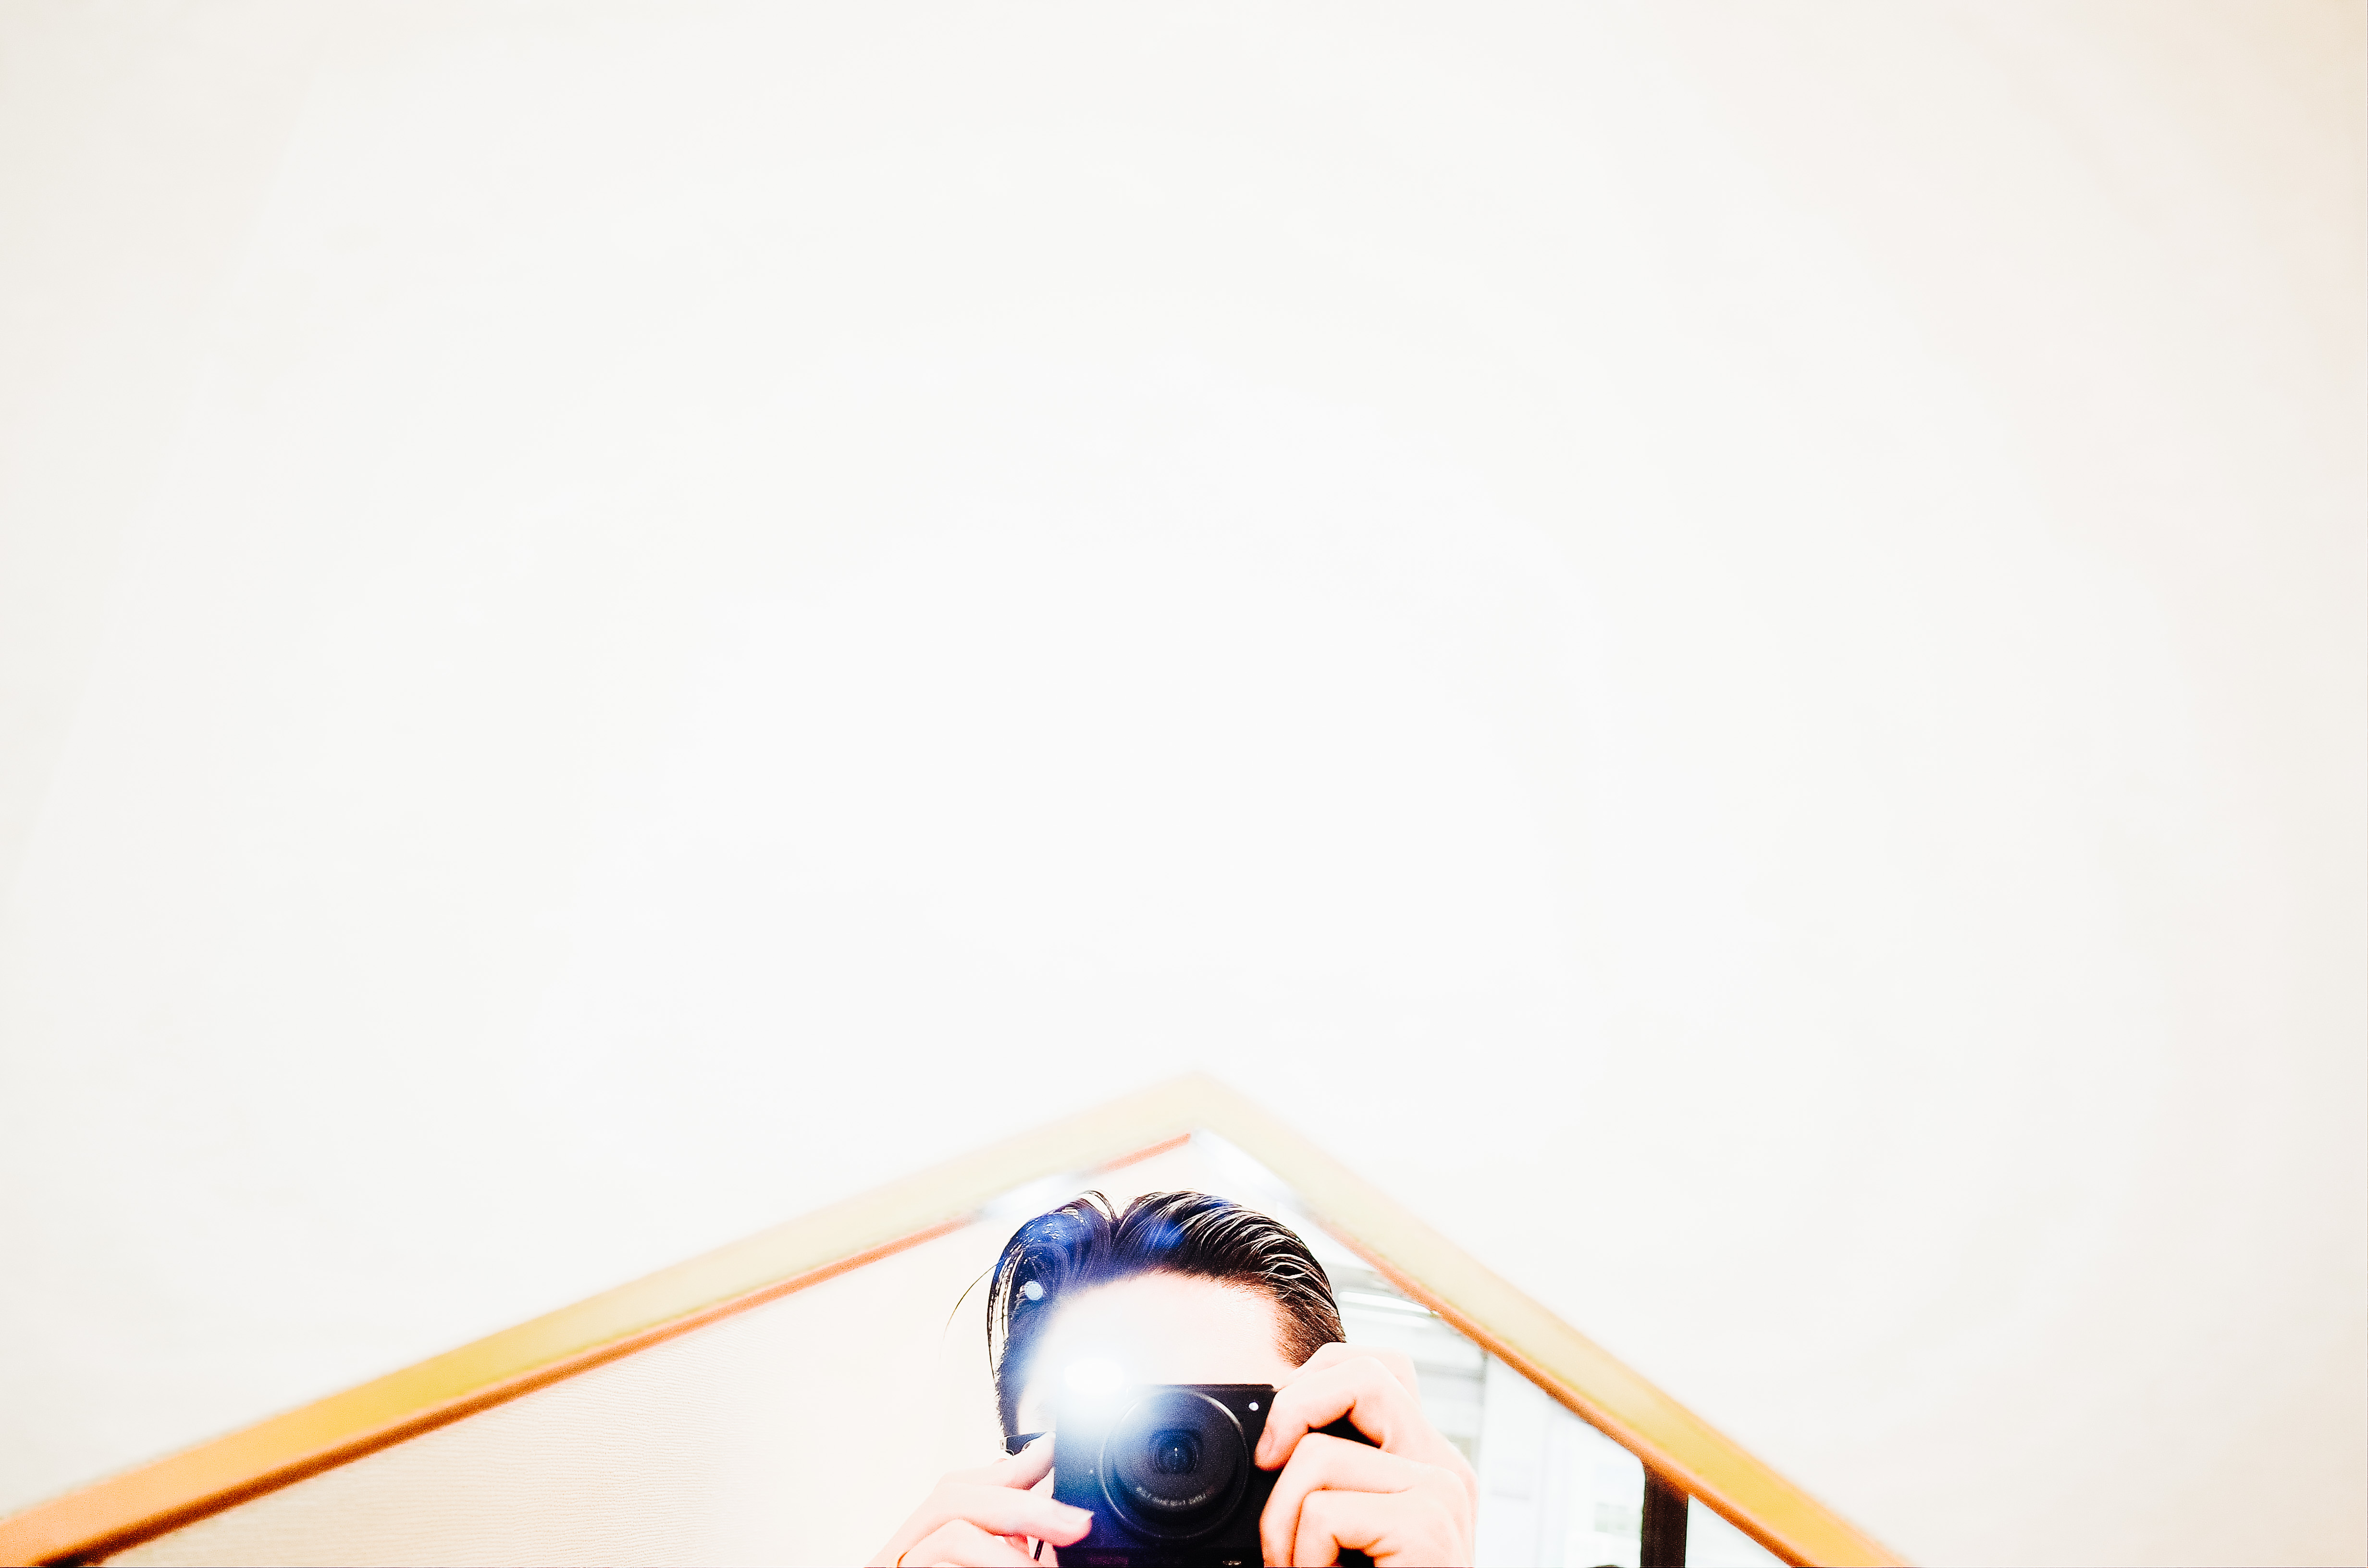 Eric Kim selfie with flash.